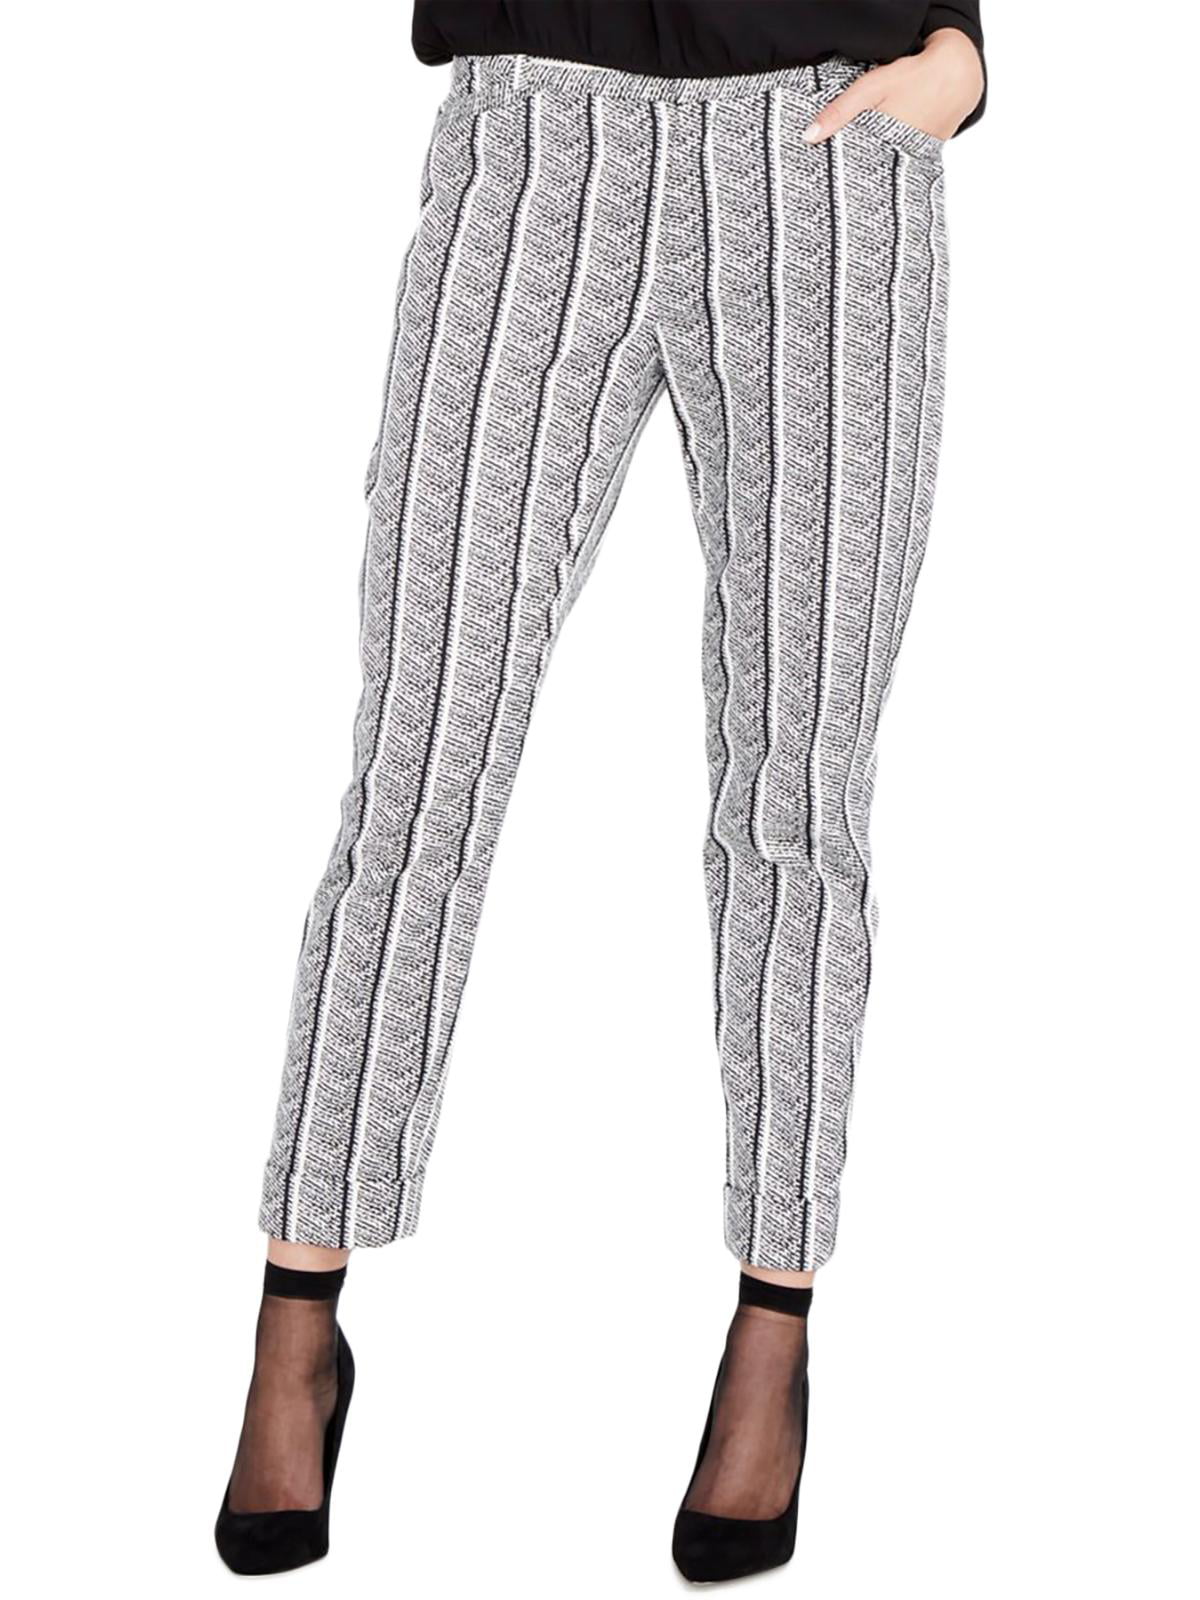 rachel rachel roy womens cuffed printed trouser pants - Walmart.com